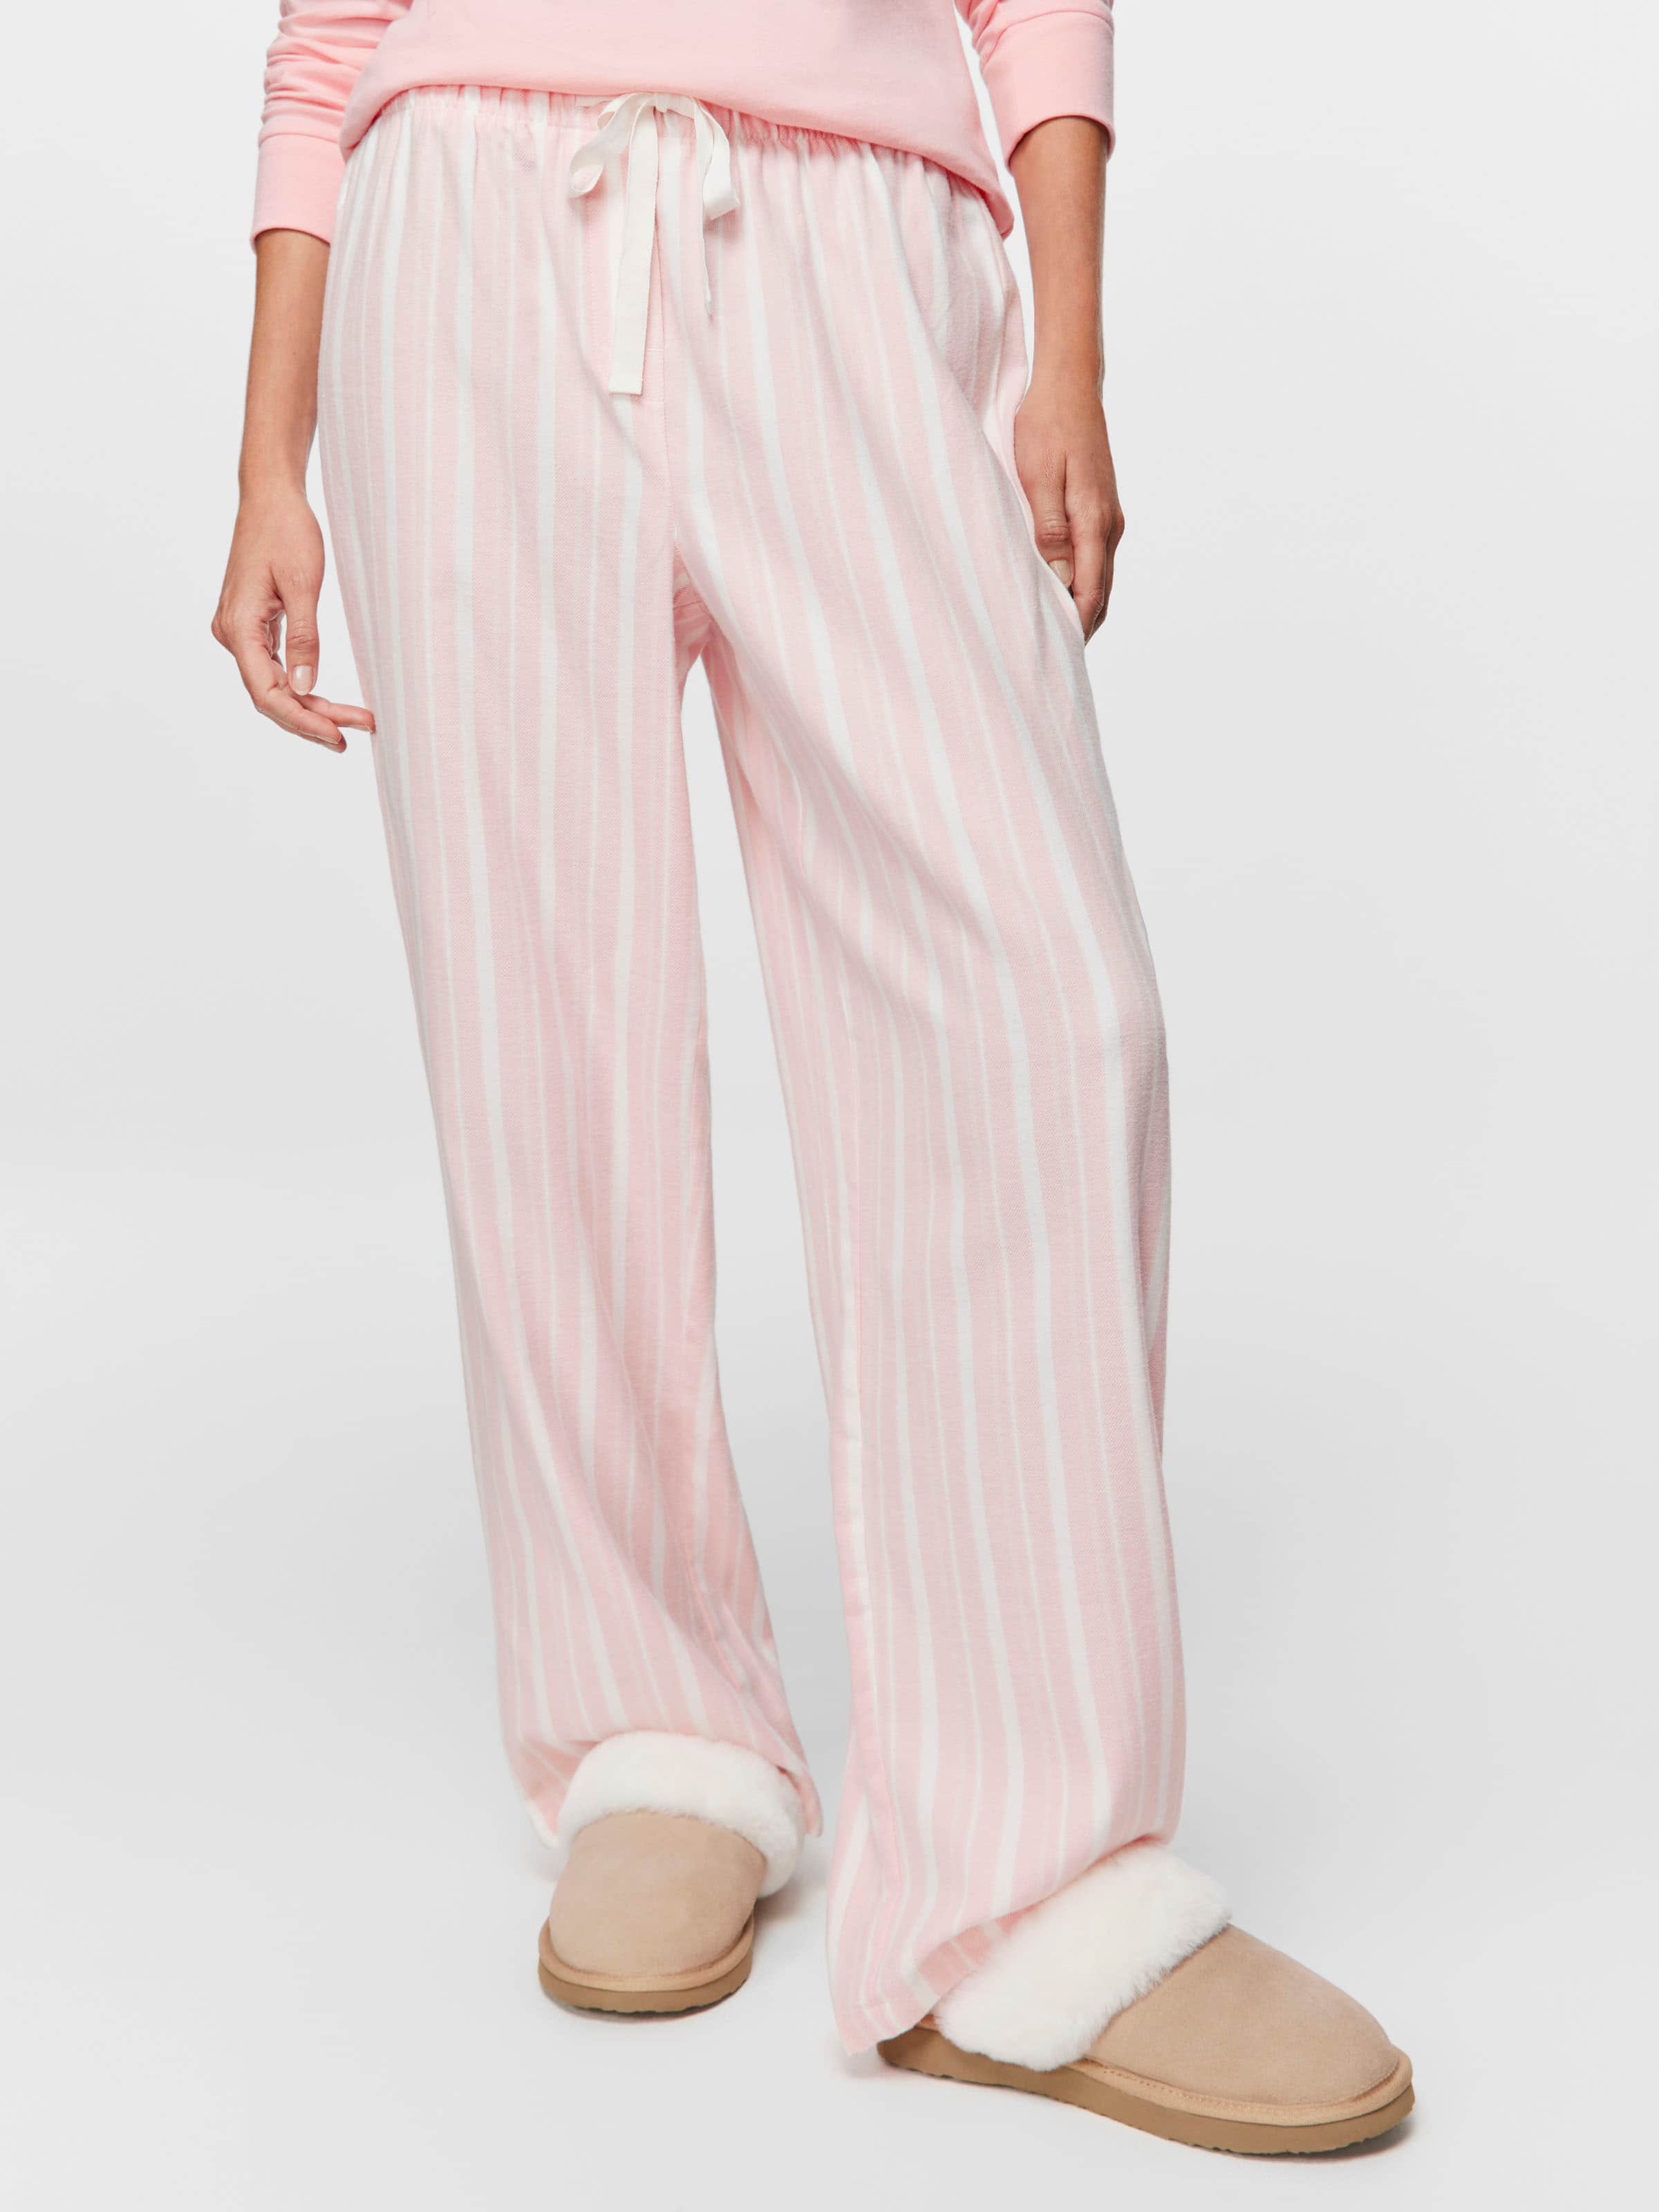 Womens Pyjama Pants - Flannelette Pants